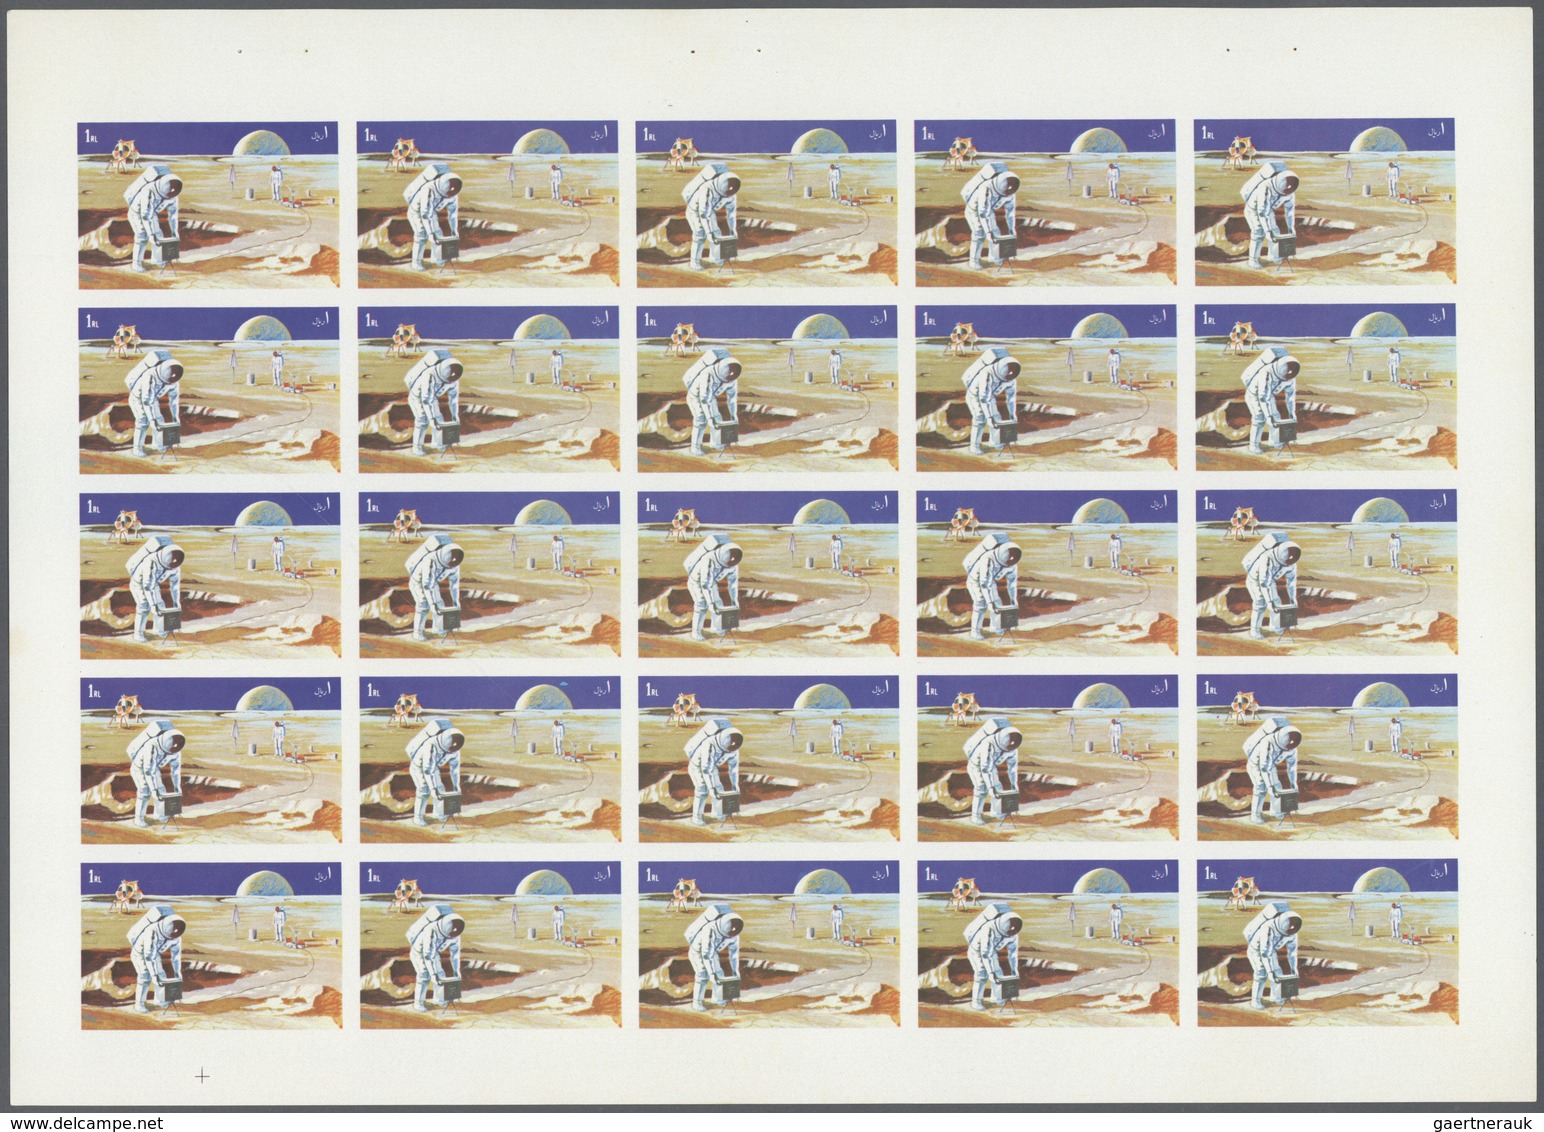 Thematik: Raumfahrt / astronautics: 1972, Sharjah, APOLLO 11+16, MNH assortment of apprx. 580 progre